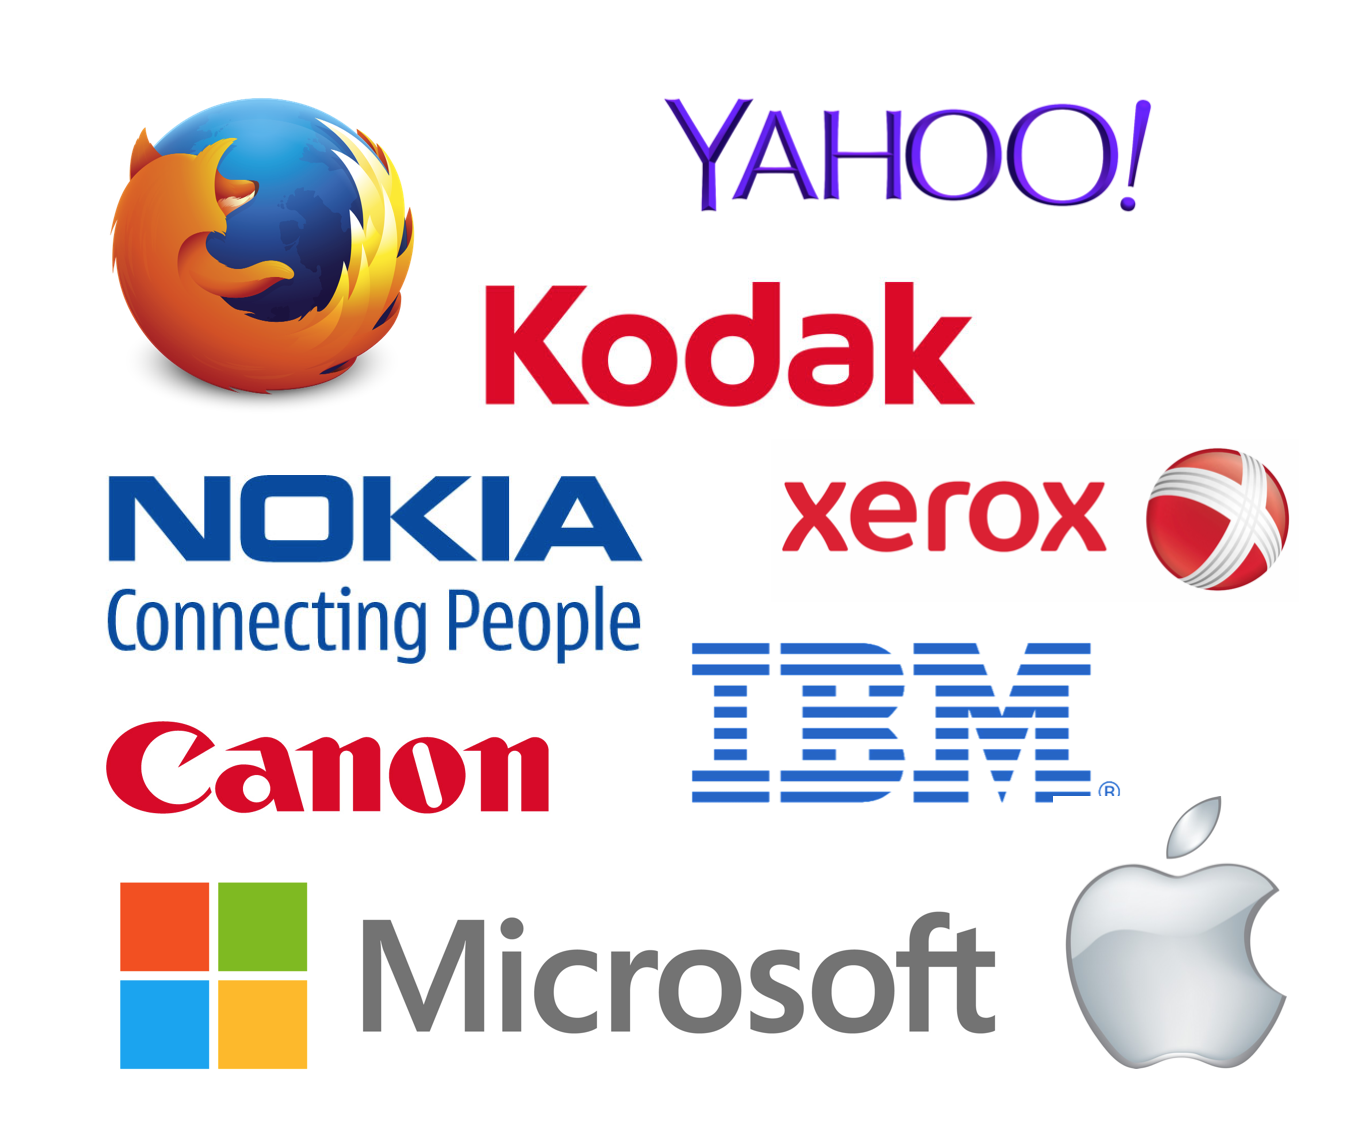 computer technology logos and names